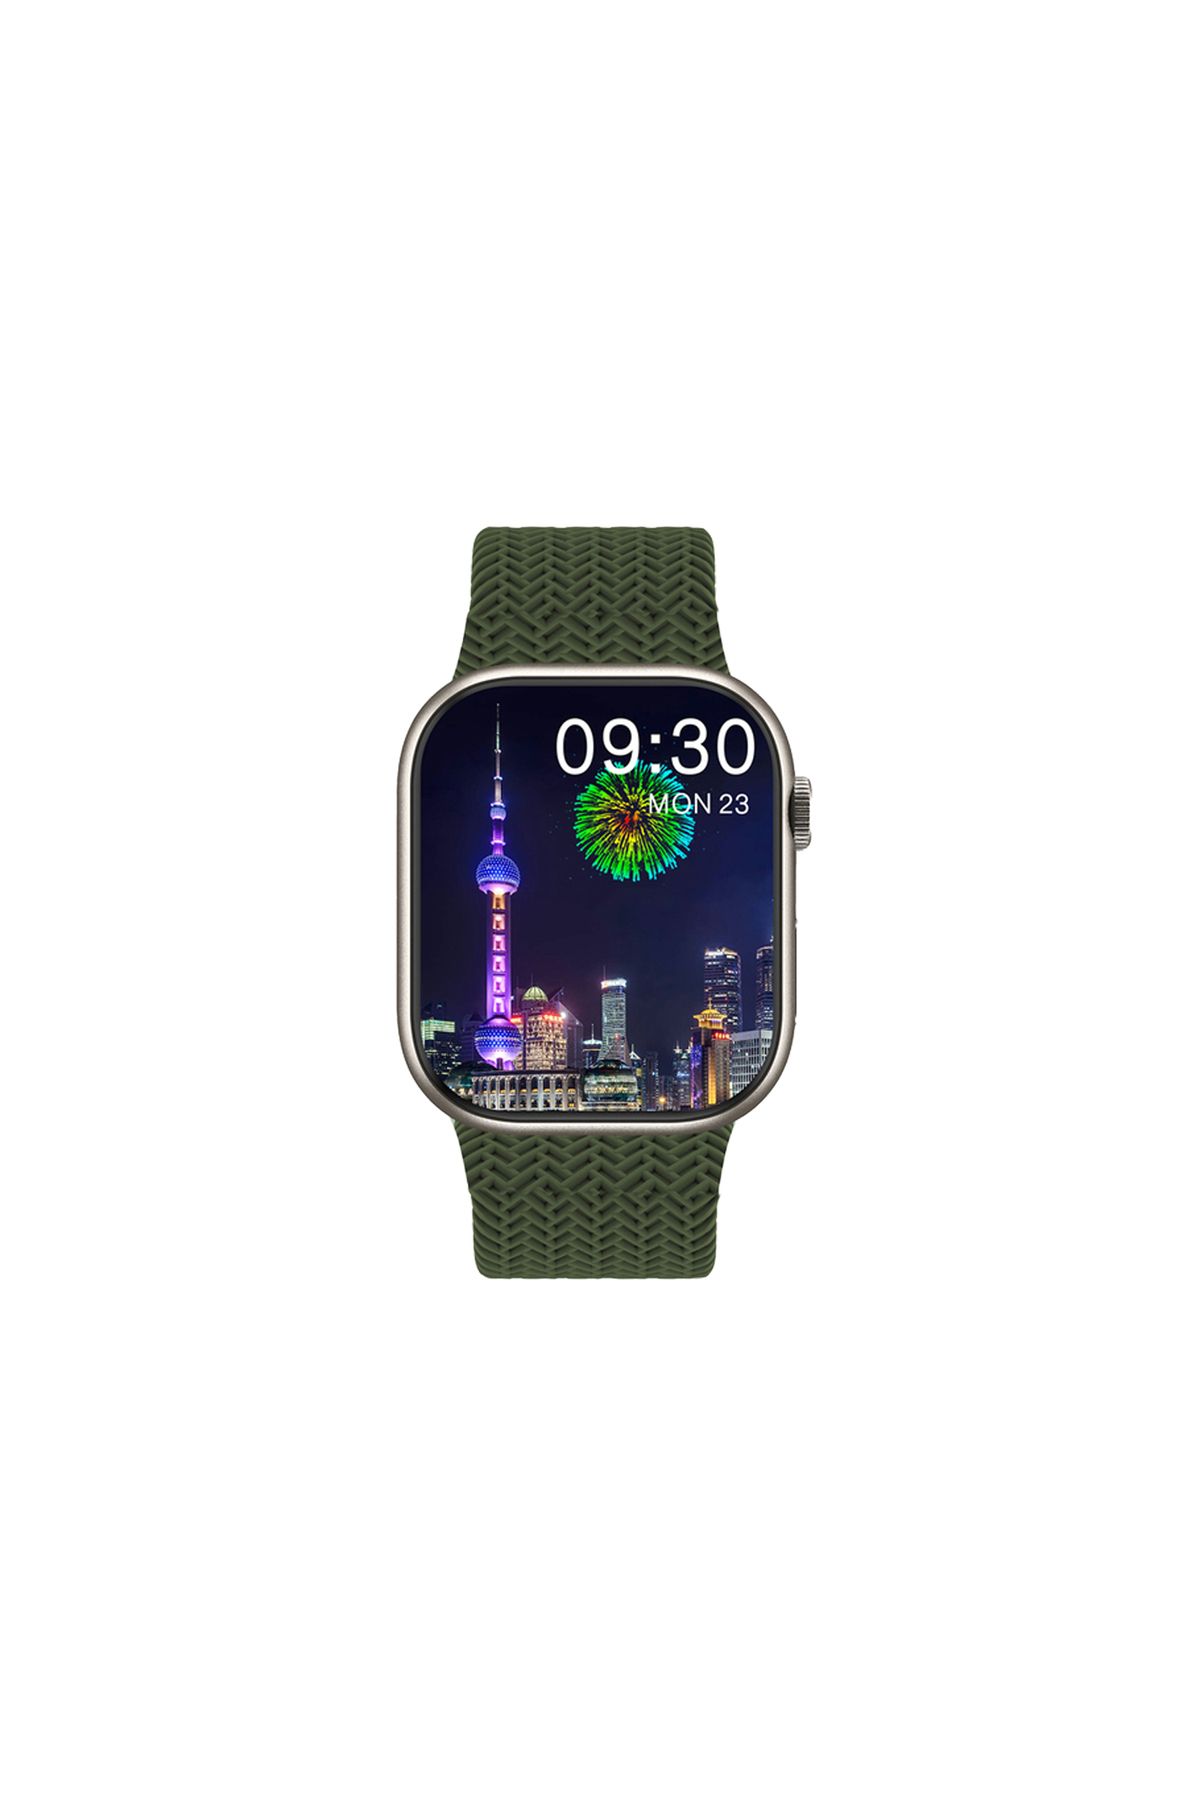 Global Watch HK9 Pro Plus Amoled Ekran Android İos HarmonyOs Uyumlu Akıllı Saat Yeşil WNE0967